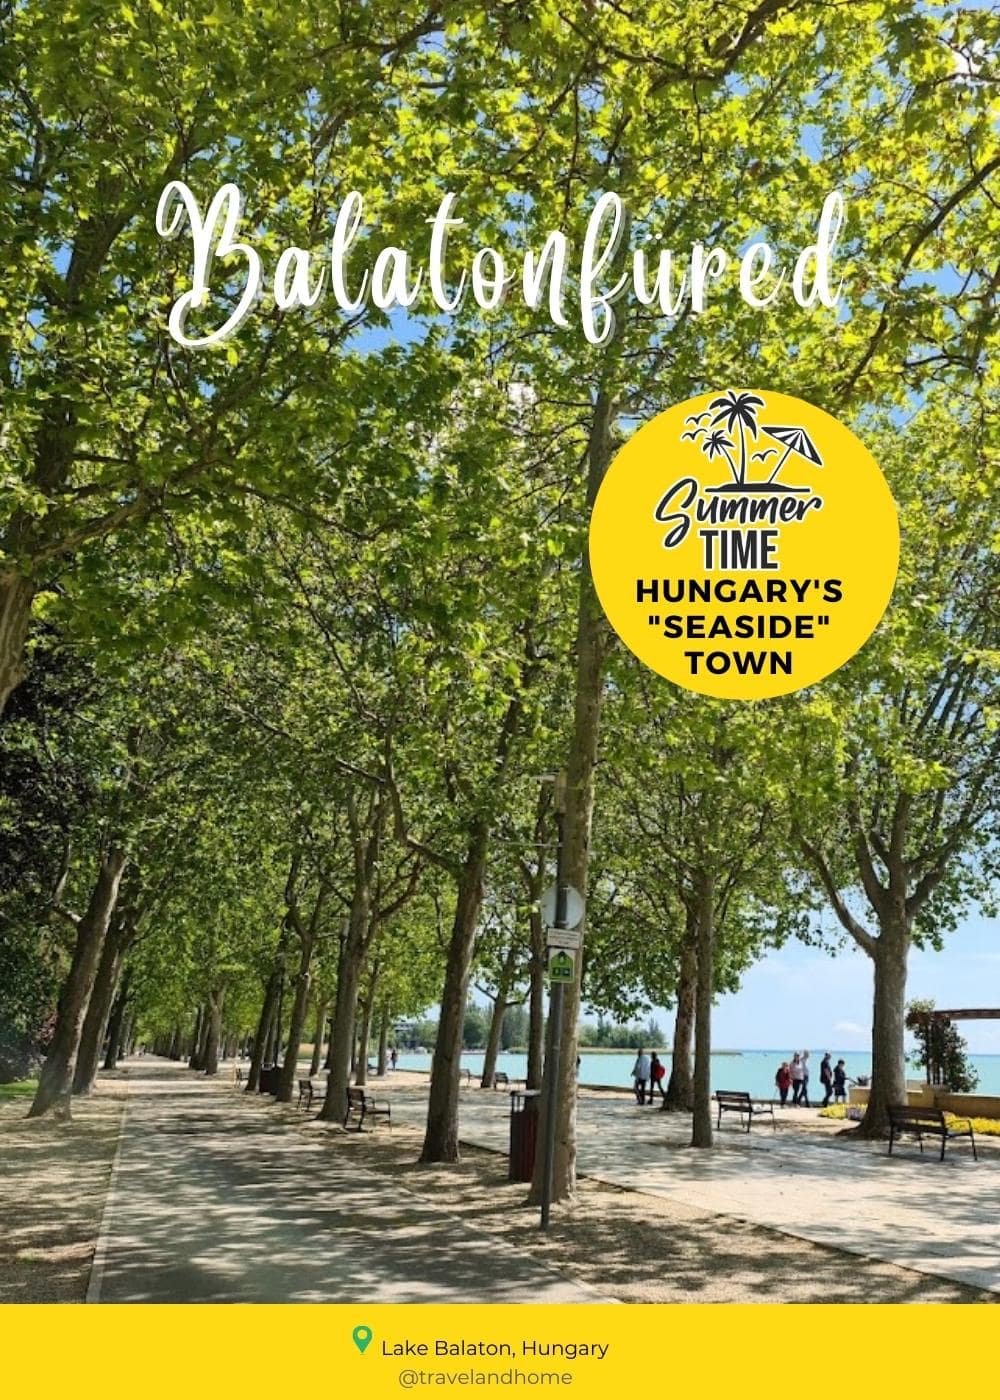 Balatonfured travel guide how longs daytrips things to do Balatonfured travel and home travelandhome min